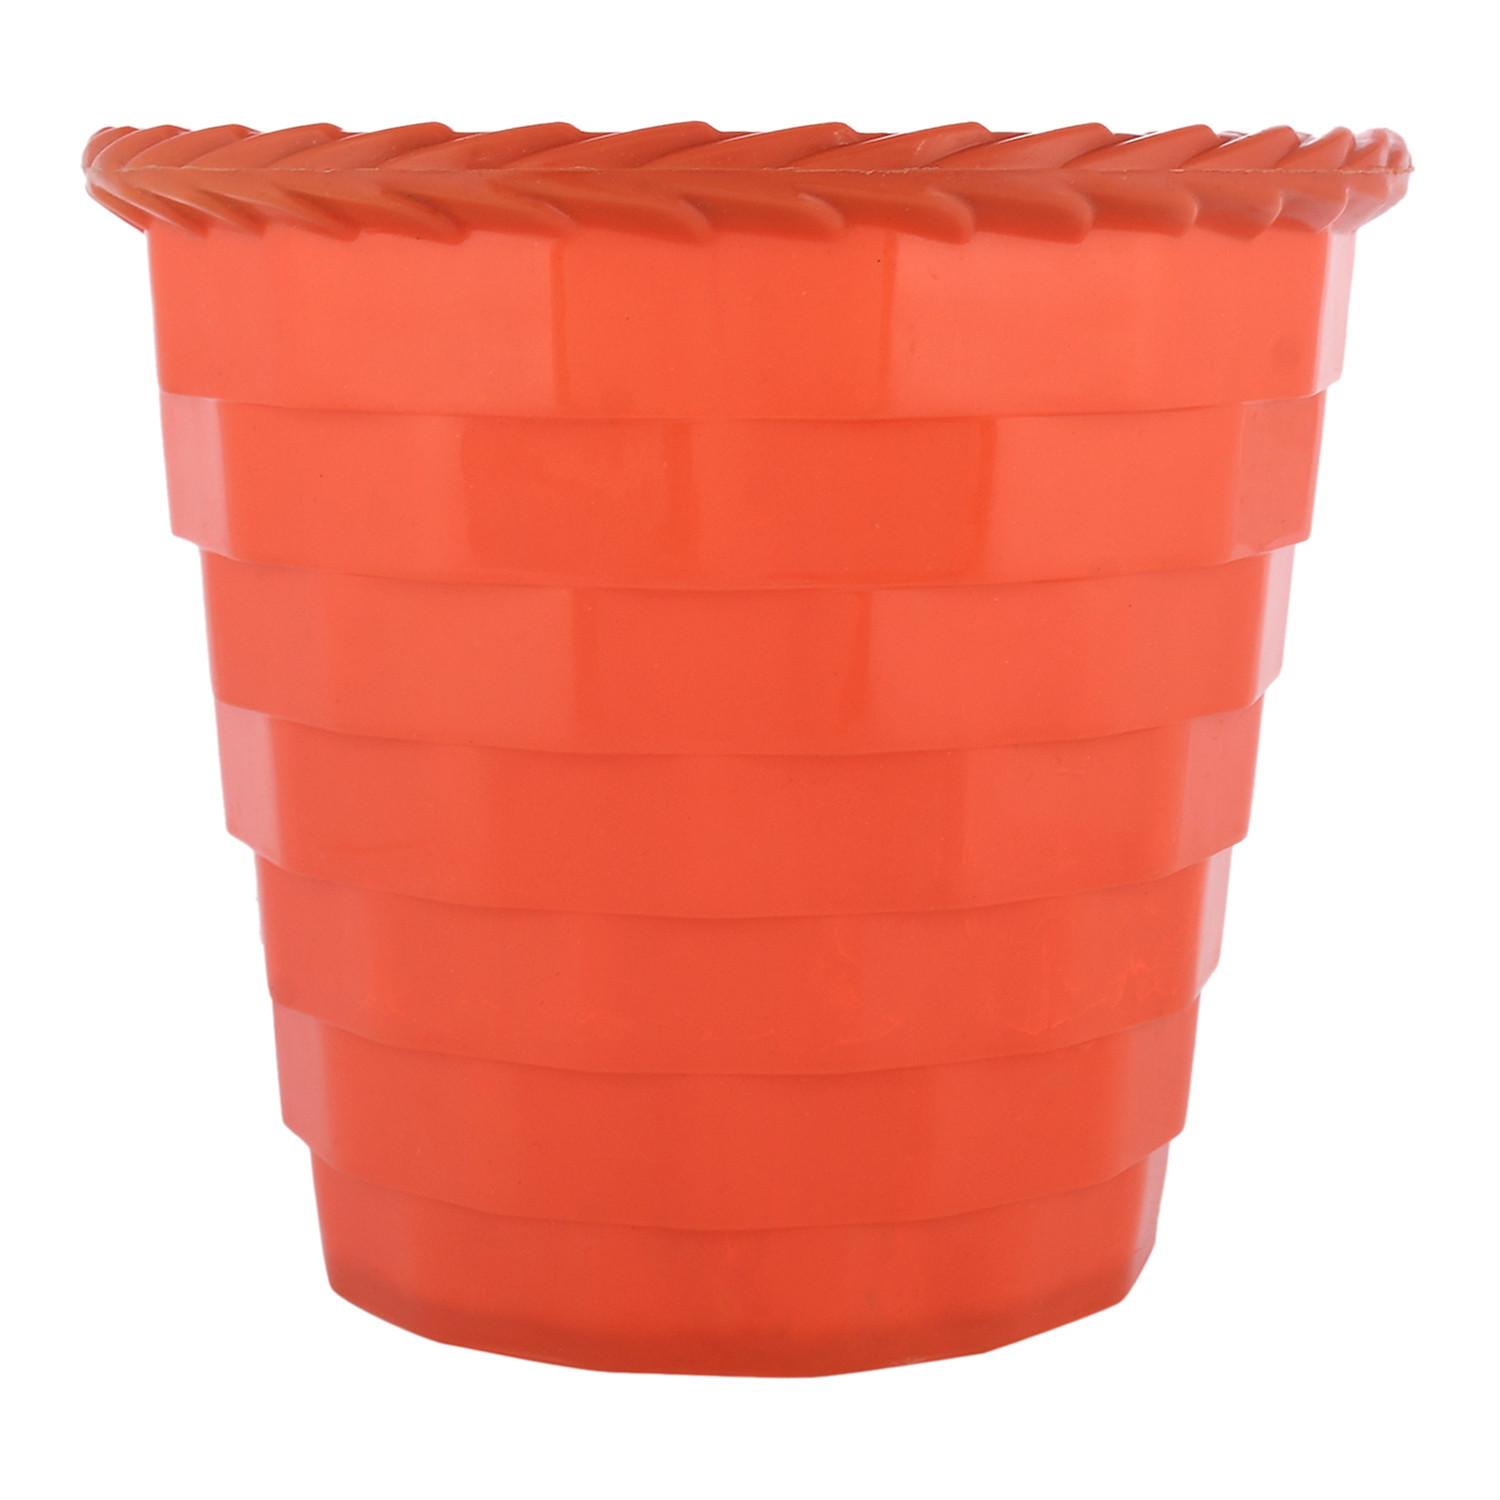 Kuber Industries Brick Flower Pot|Durable Plastic Flower Pots|Planters for Home Décor|Garden|Living Room|Balcony|8 Inch|(Orange)